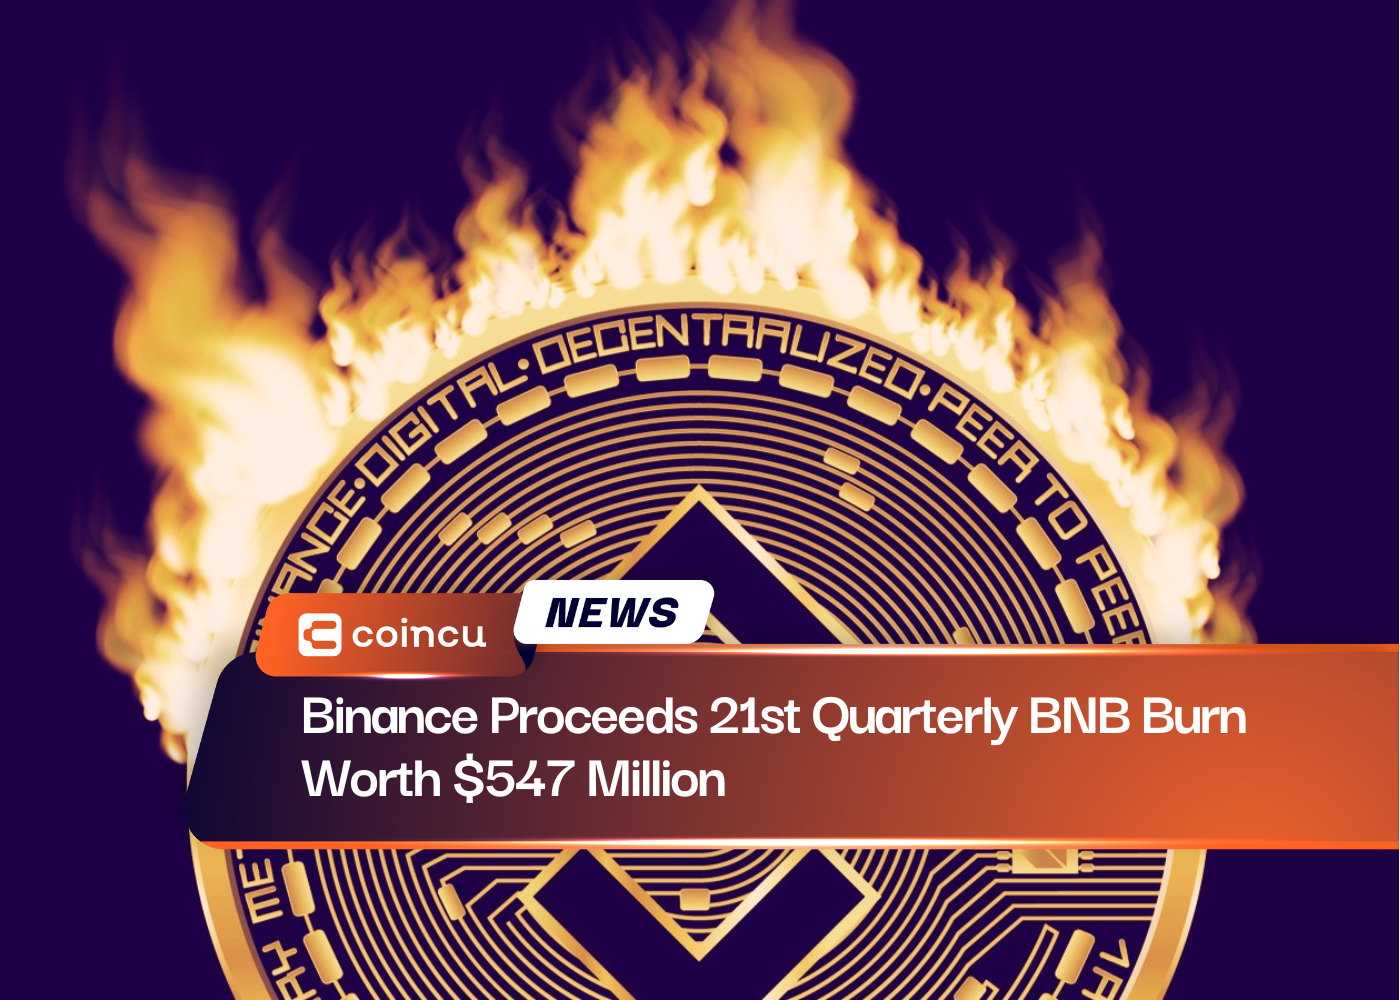 Binance Proceeds 21st Quarterly BNB Burn Worth $547 Million